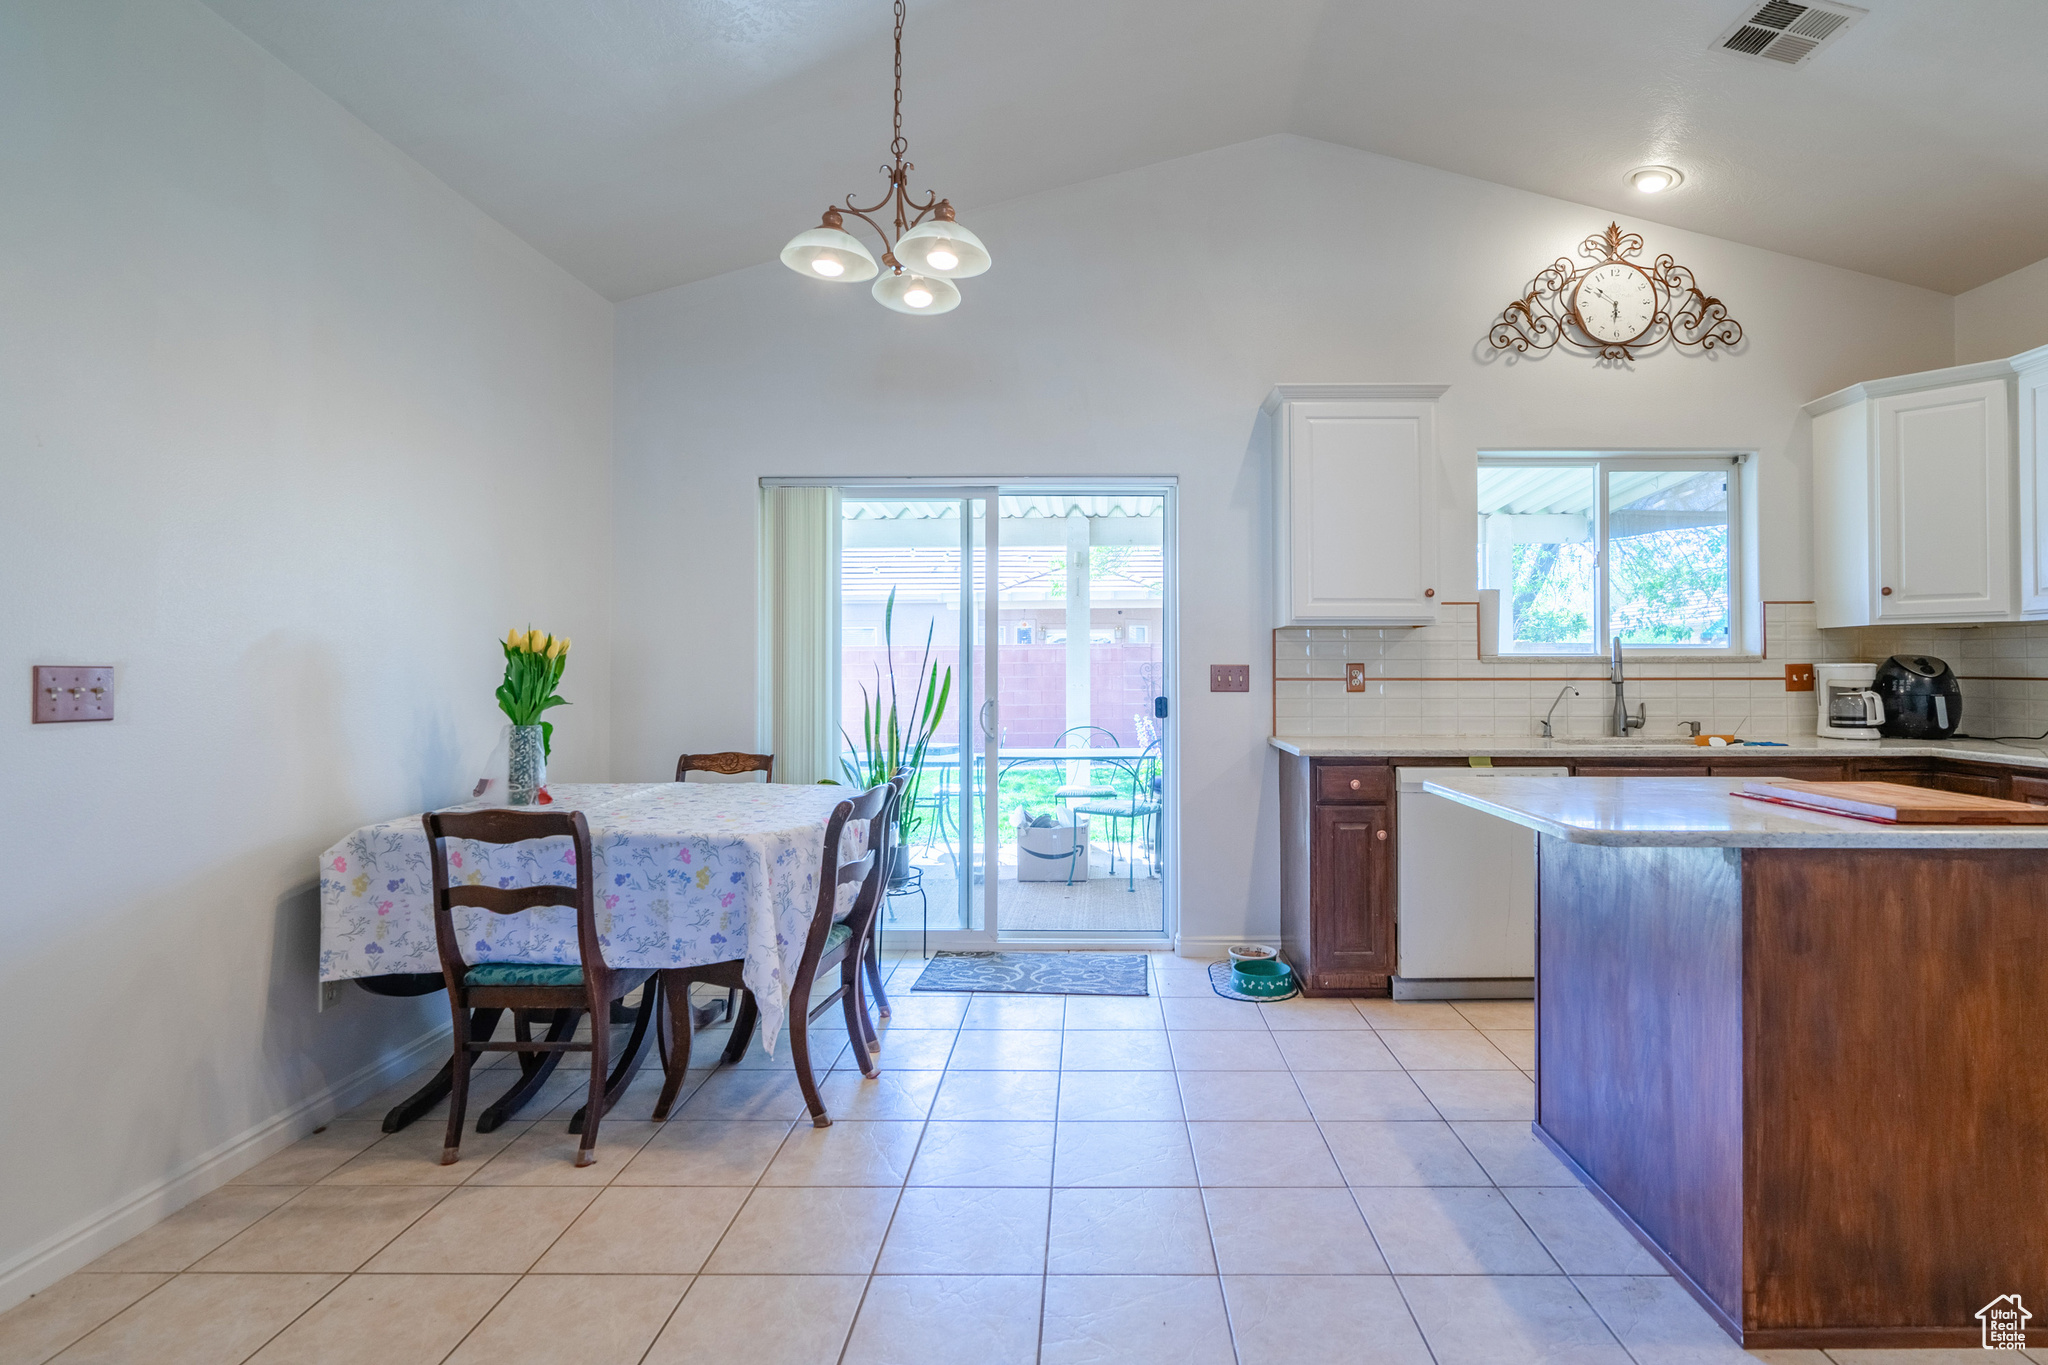 Kitchen featuring white dishwasher, light tile flooring, tasteful backsplash, white cabinetry, and pendant lighting